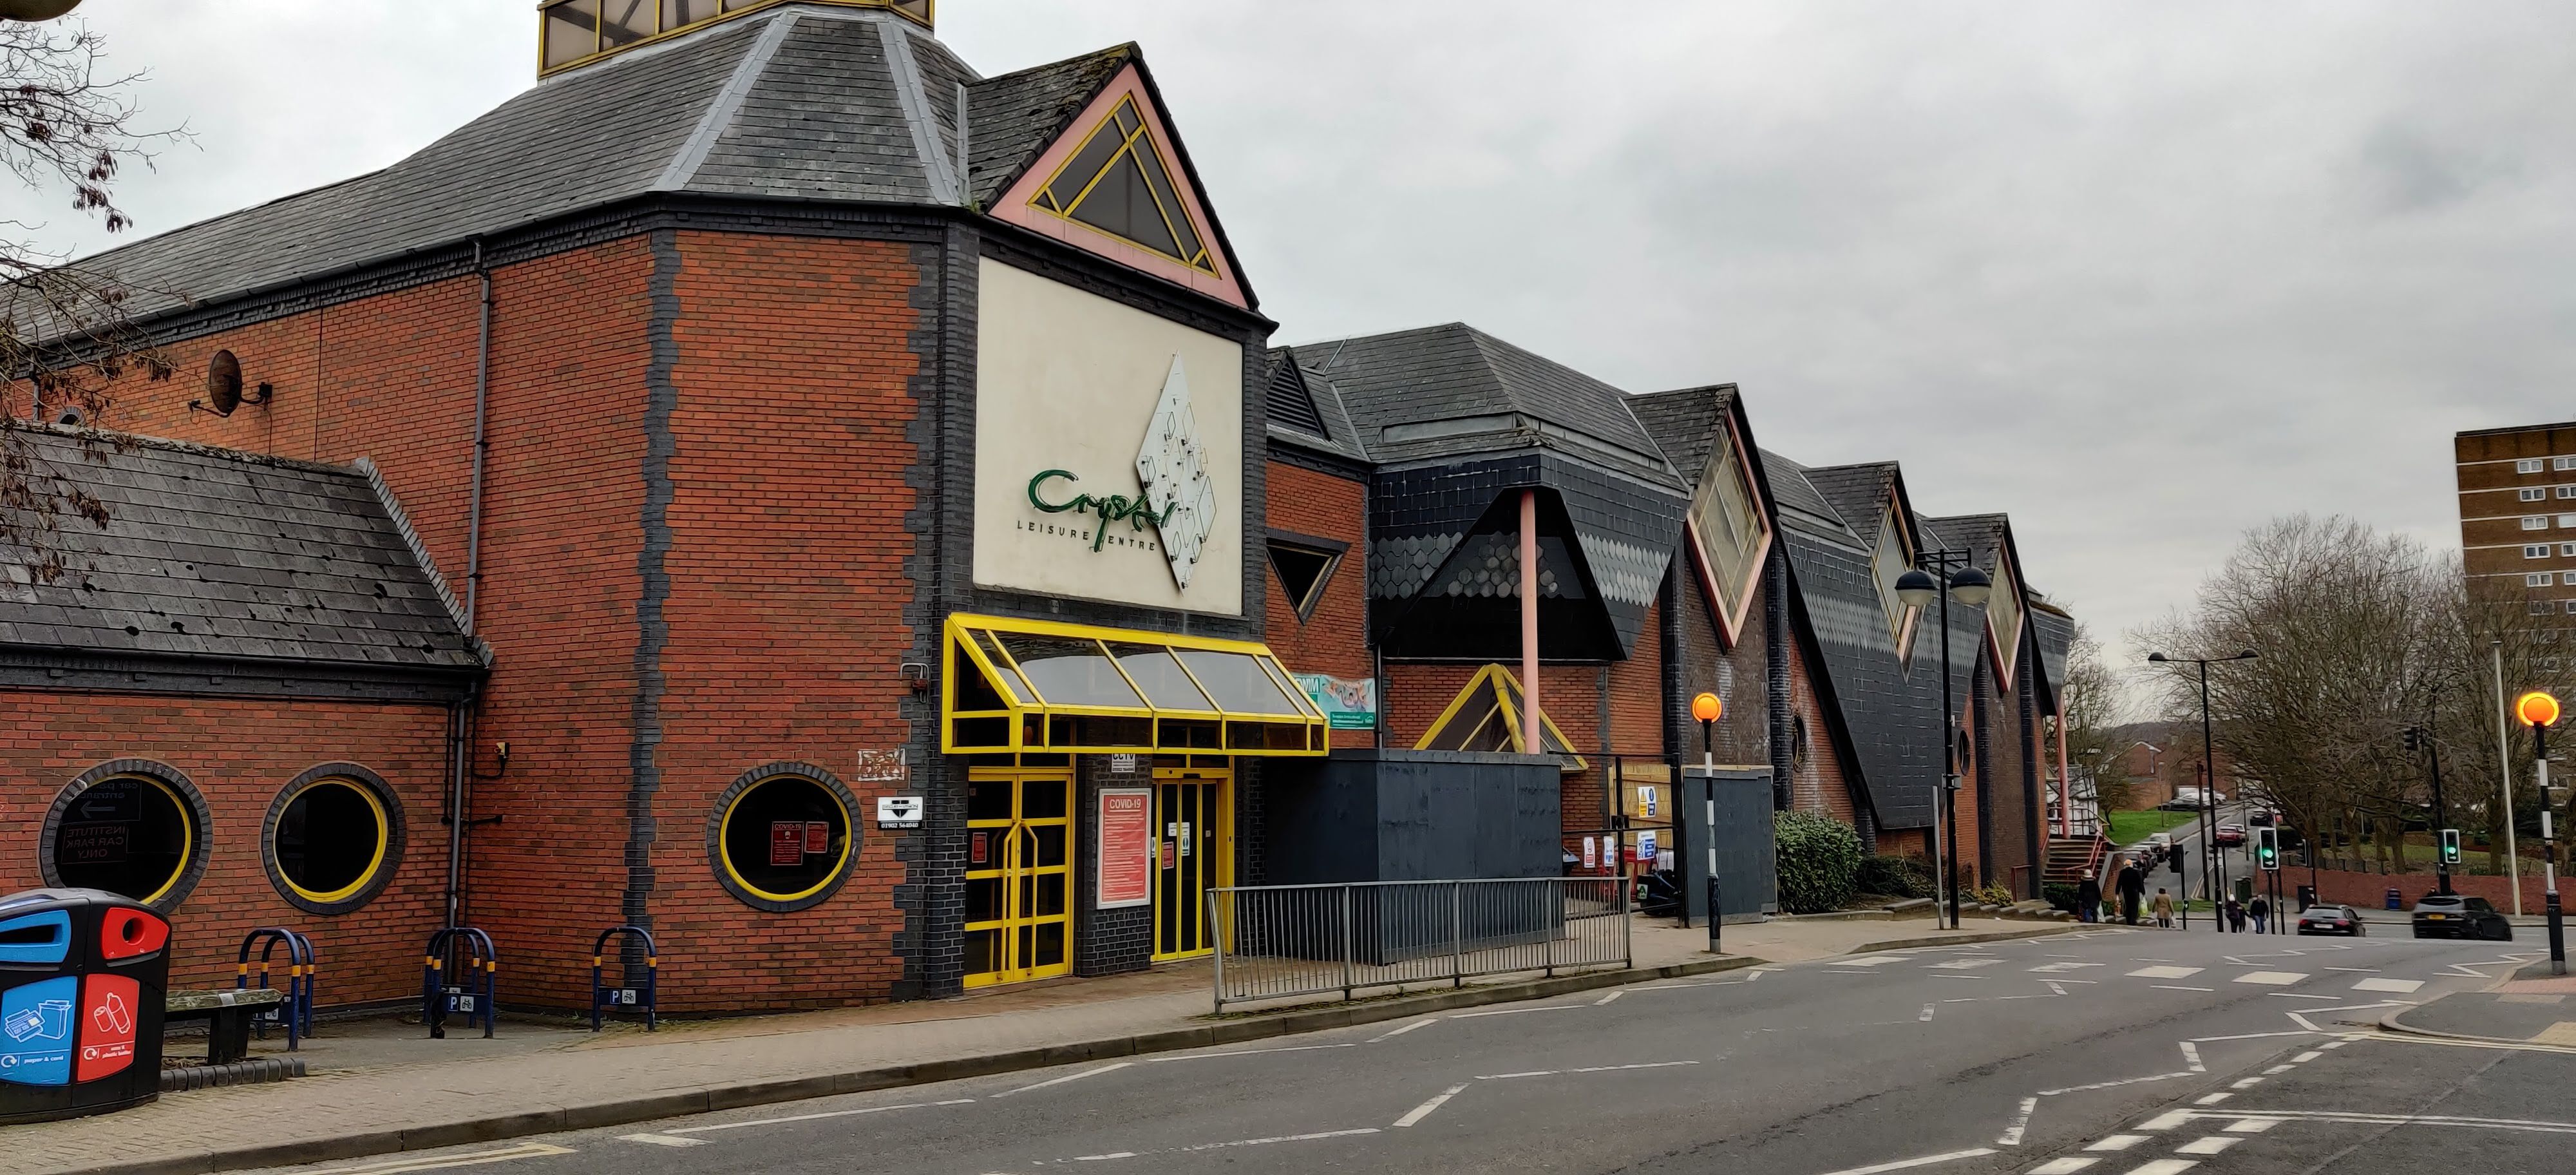 Stourbridge’s Crystal Leisure centre is undergoing a major revamp